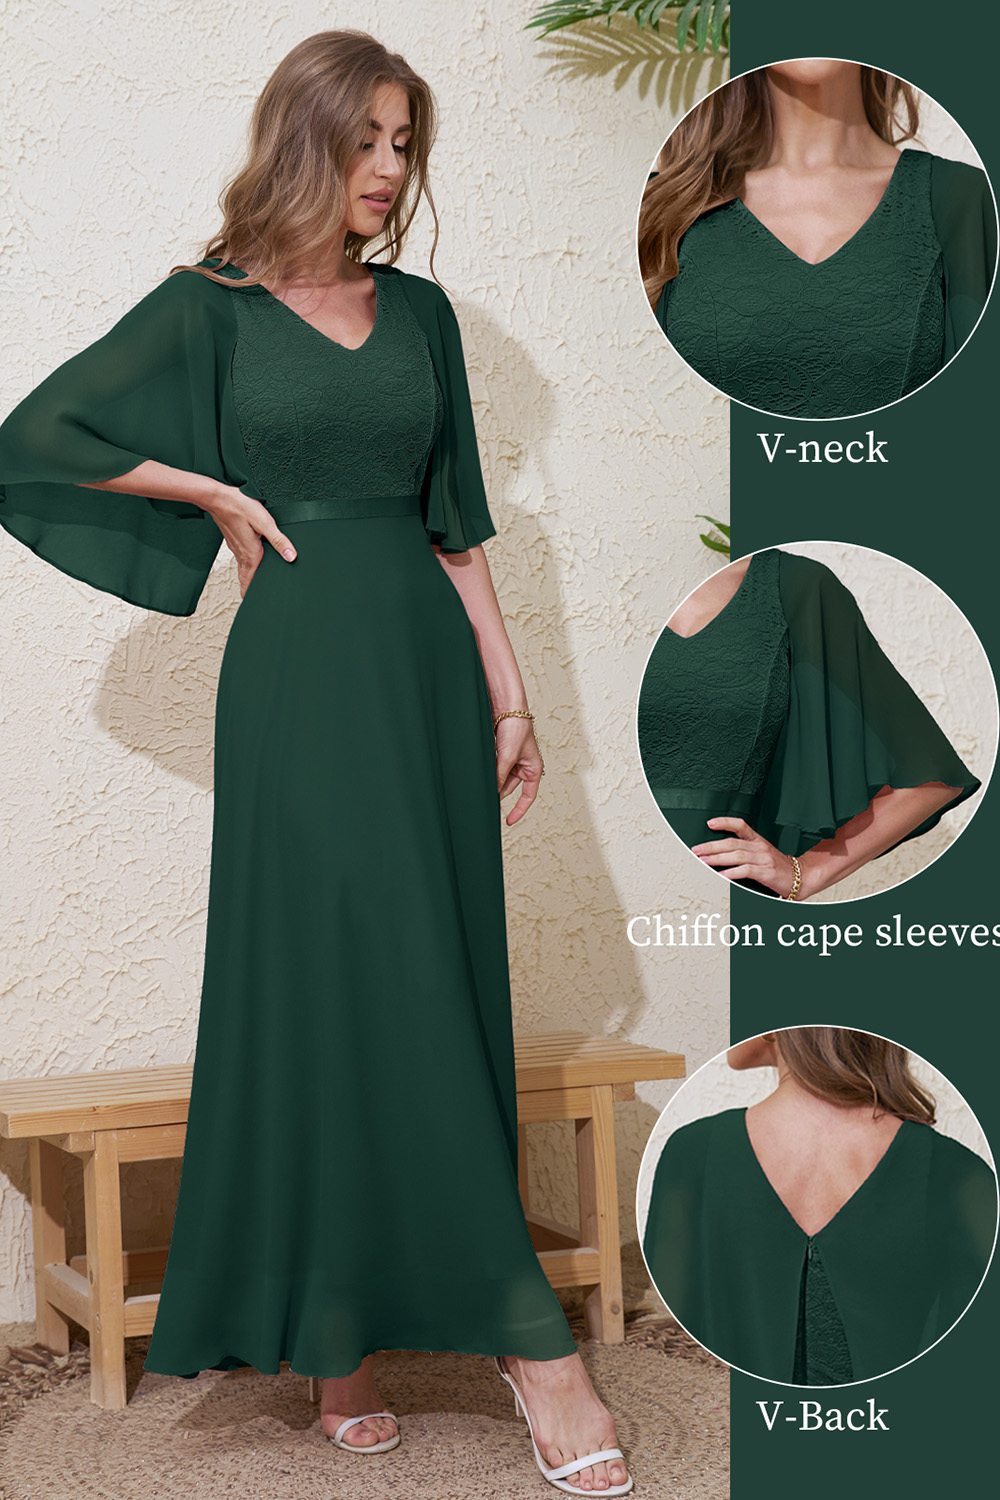 Darkgreen Elegant V-Neck Chiffon Evening Gown for Formal Occasions